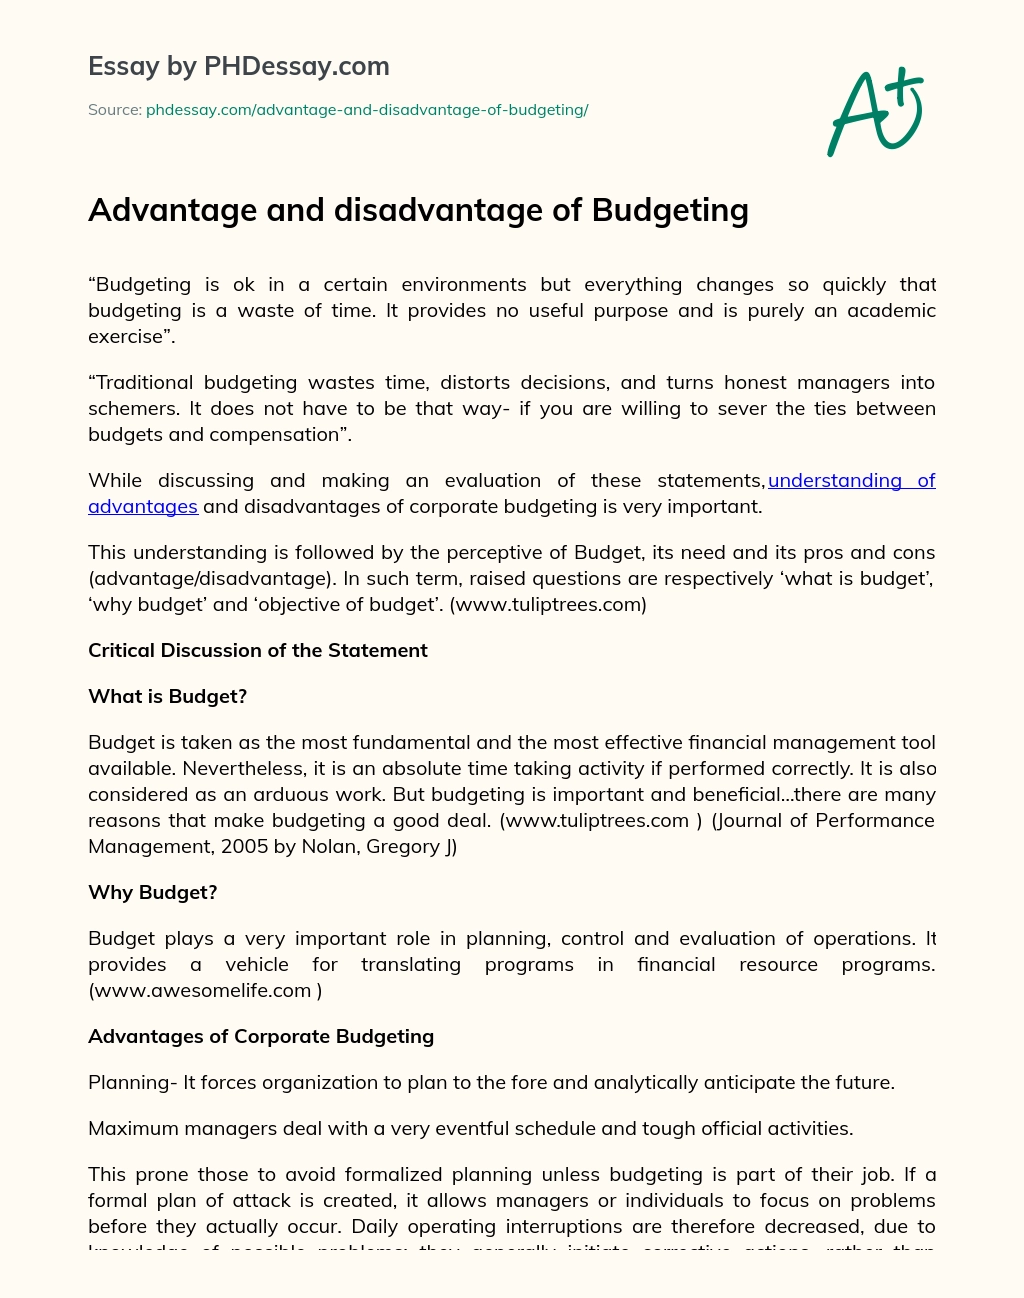 Advantage and disadvantage of Budgeting essay